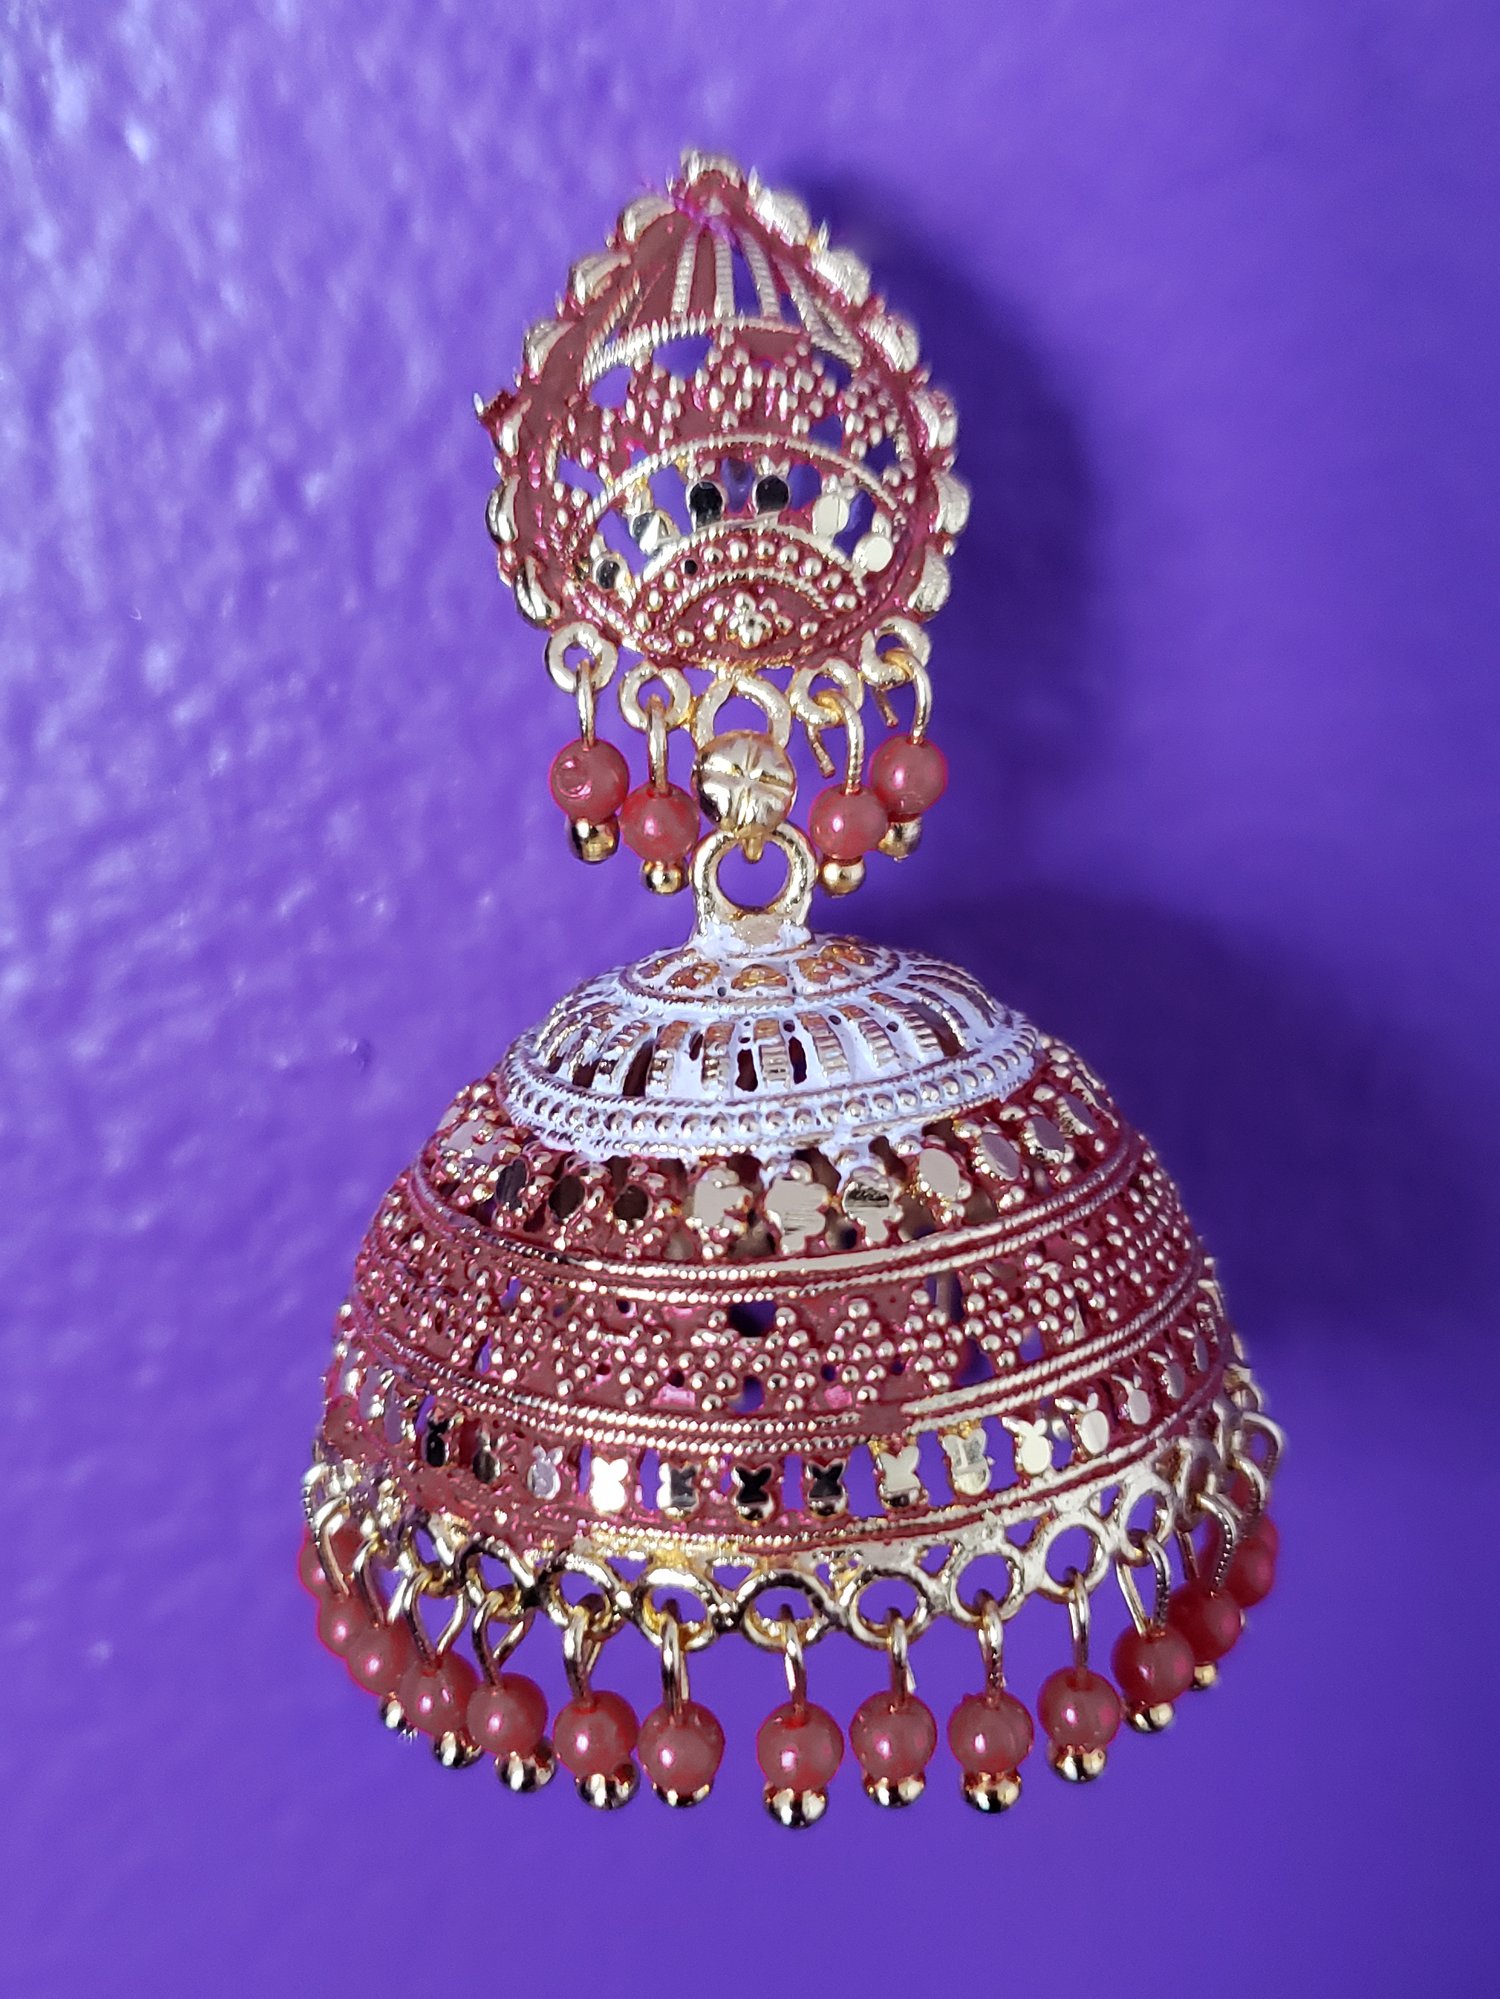 Image of Bansari Jhum Chandelier Earrings